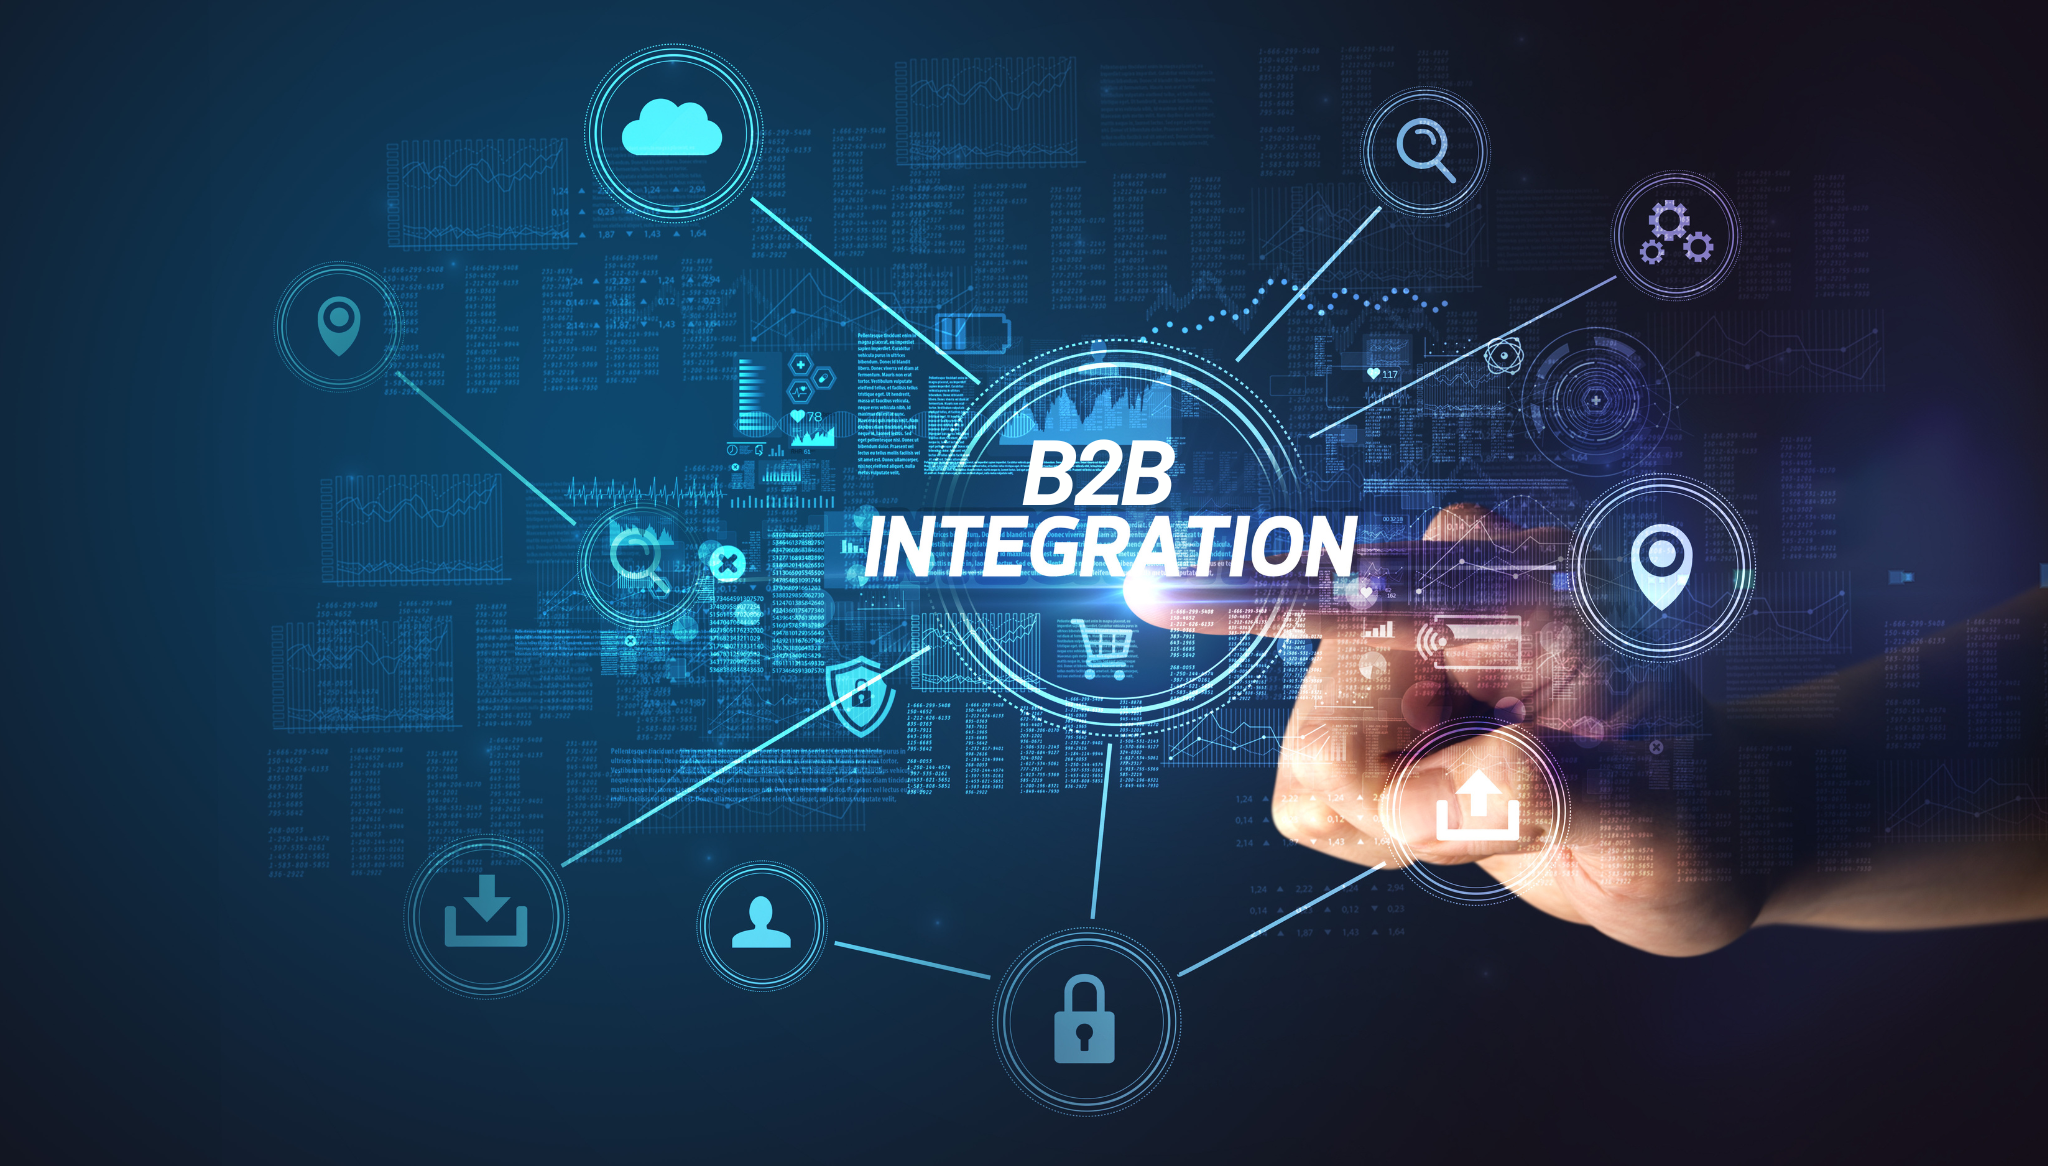 Business-to-business (B2B) integration technology